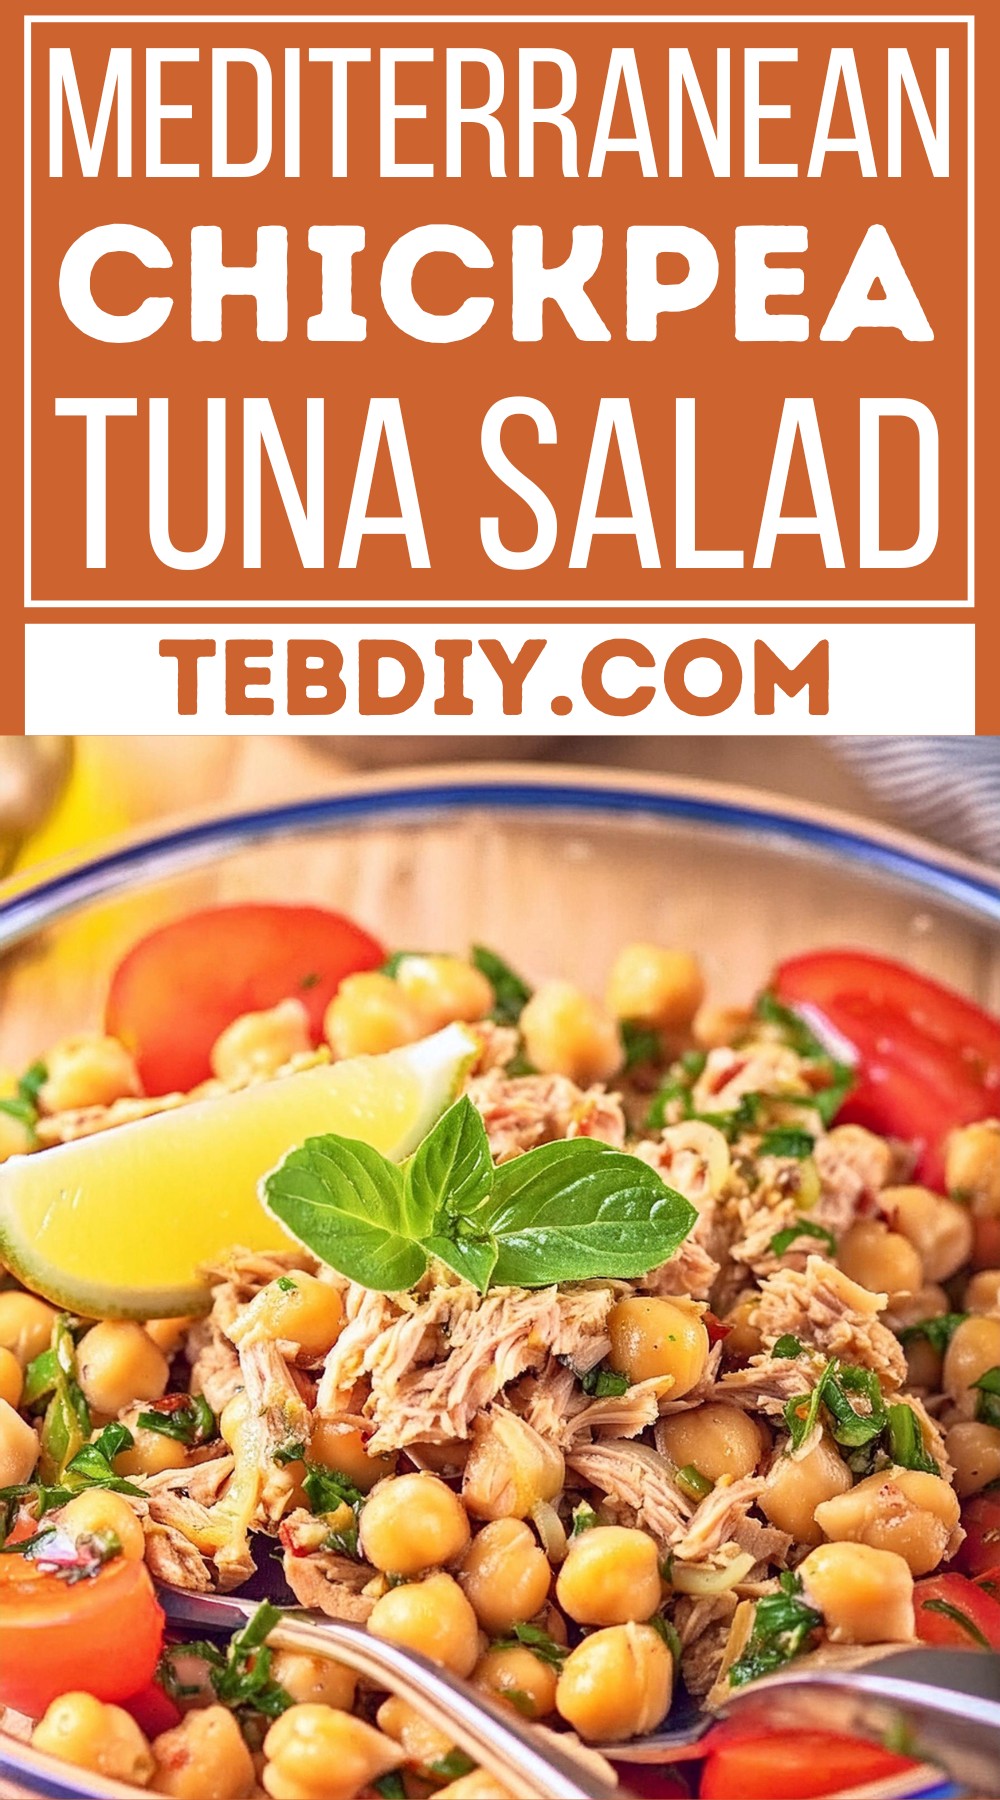 Mediterranean Chickpea Tuna Salad Recipe